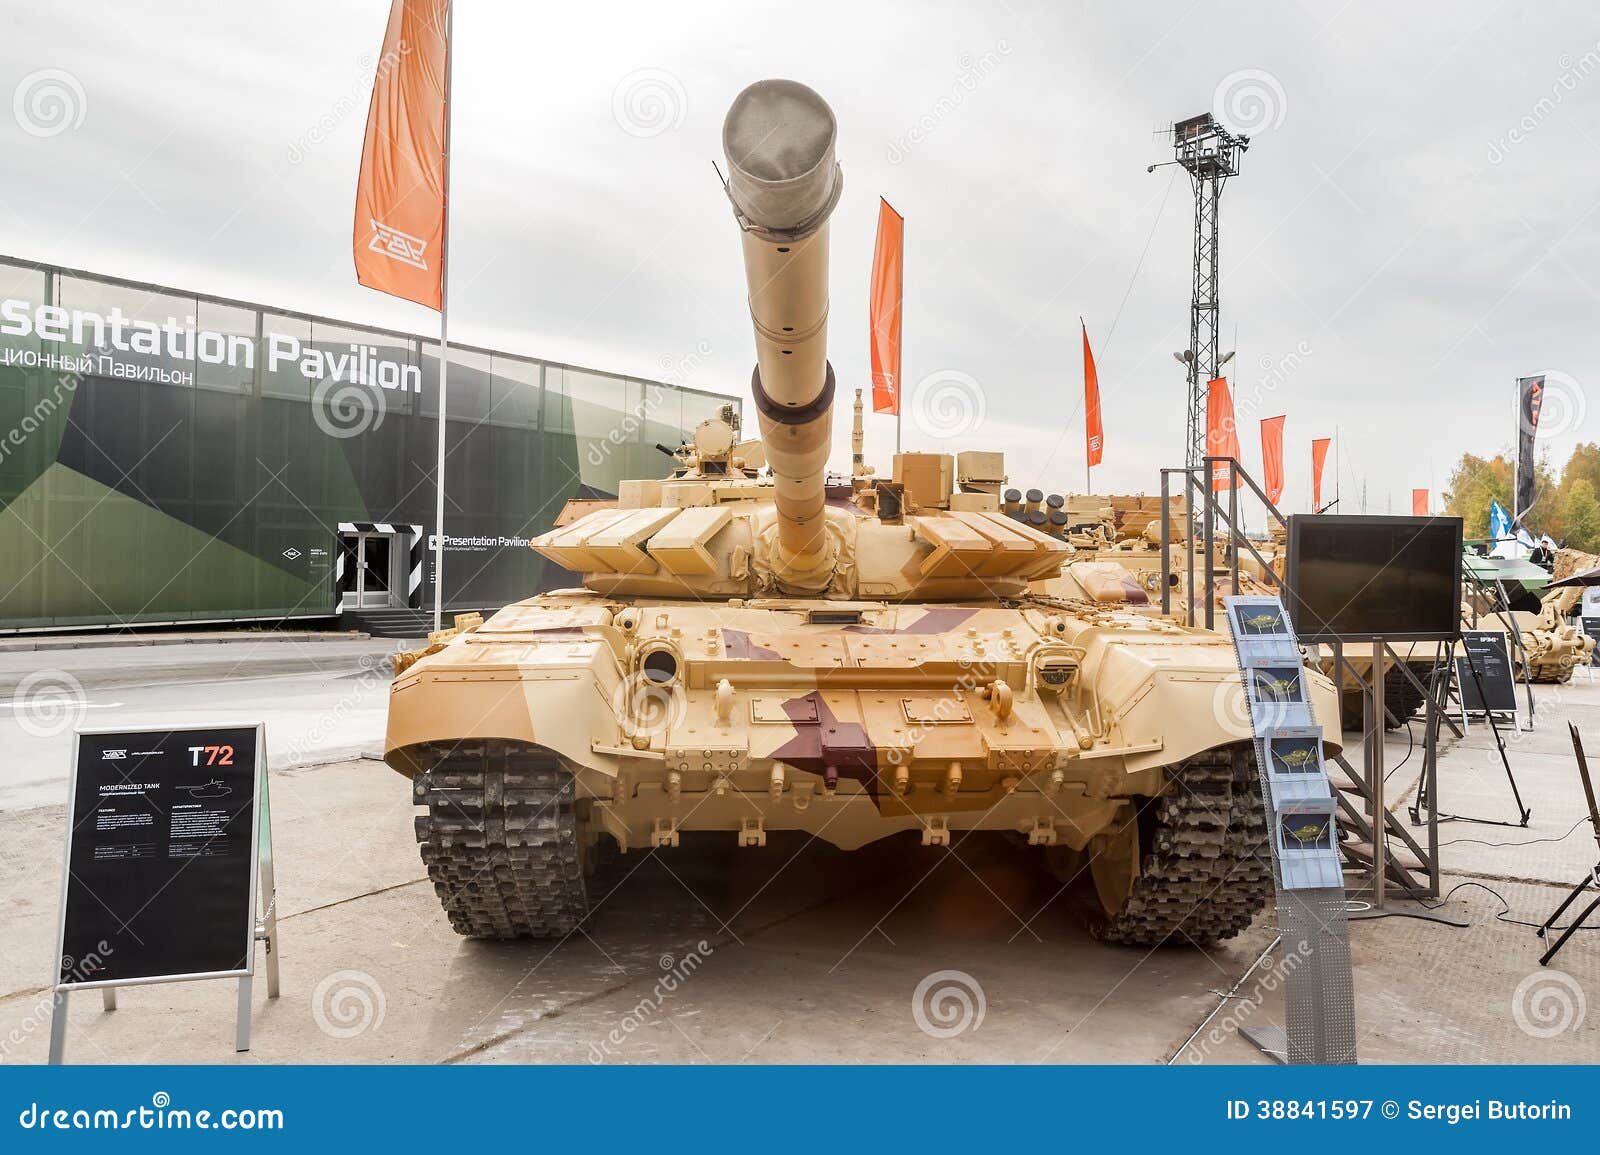 modernized-tank-t-russia-nizhniy-tagil-september-visitors-explore-military-equipment-exhibition-range-rae-exhibition-russian-38841597.jpg